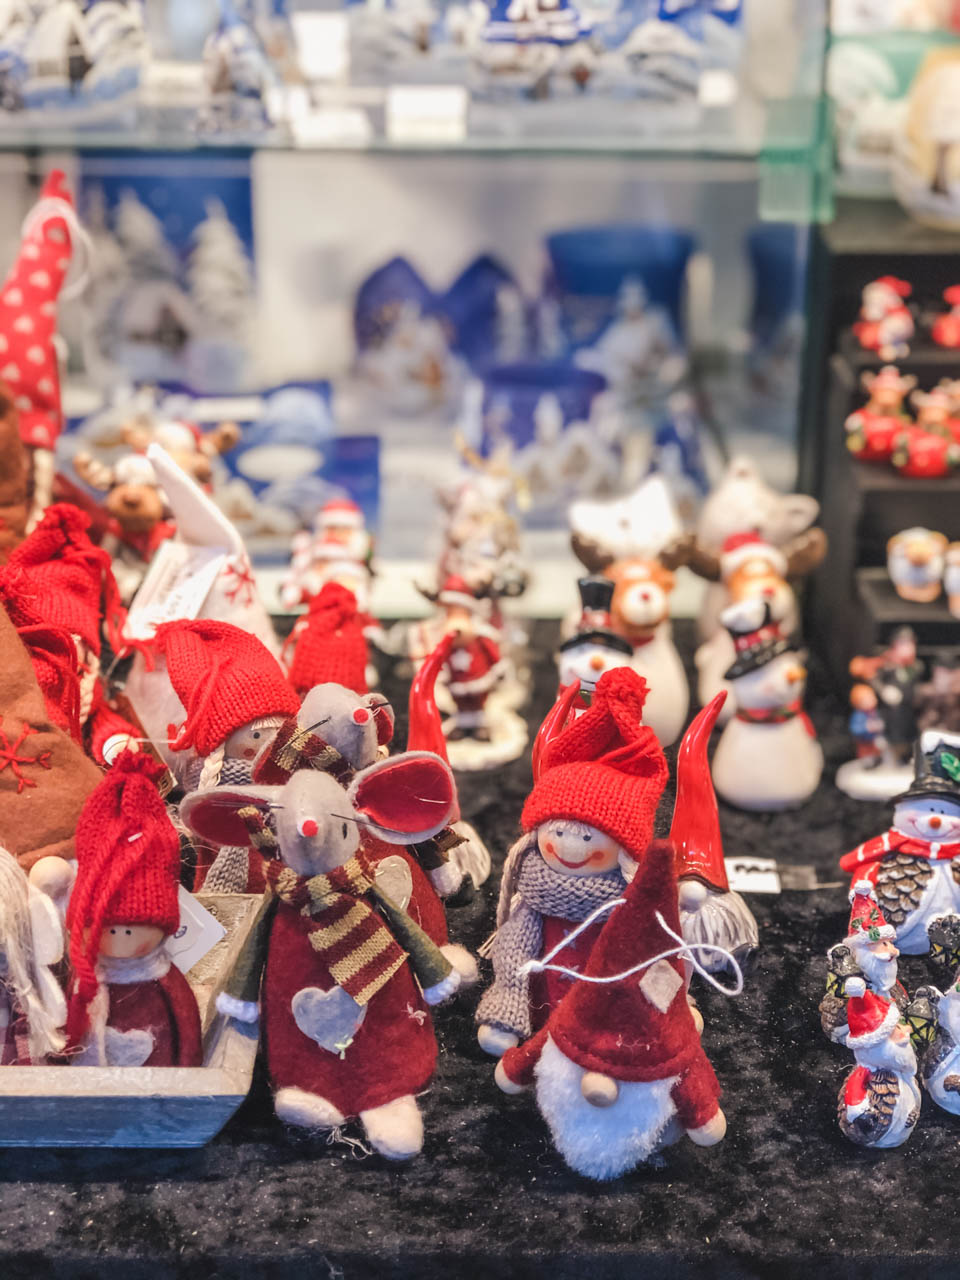 Christmas decorations on display at a Hamburg Christmas market